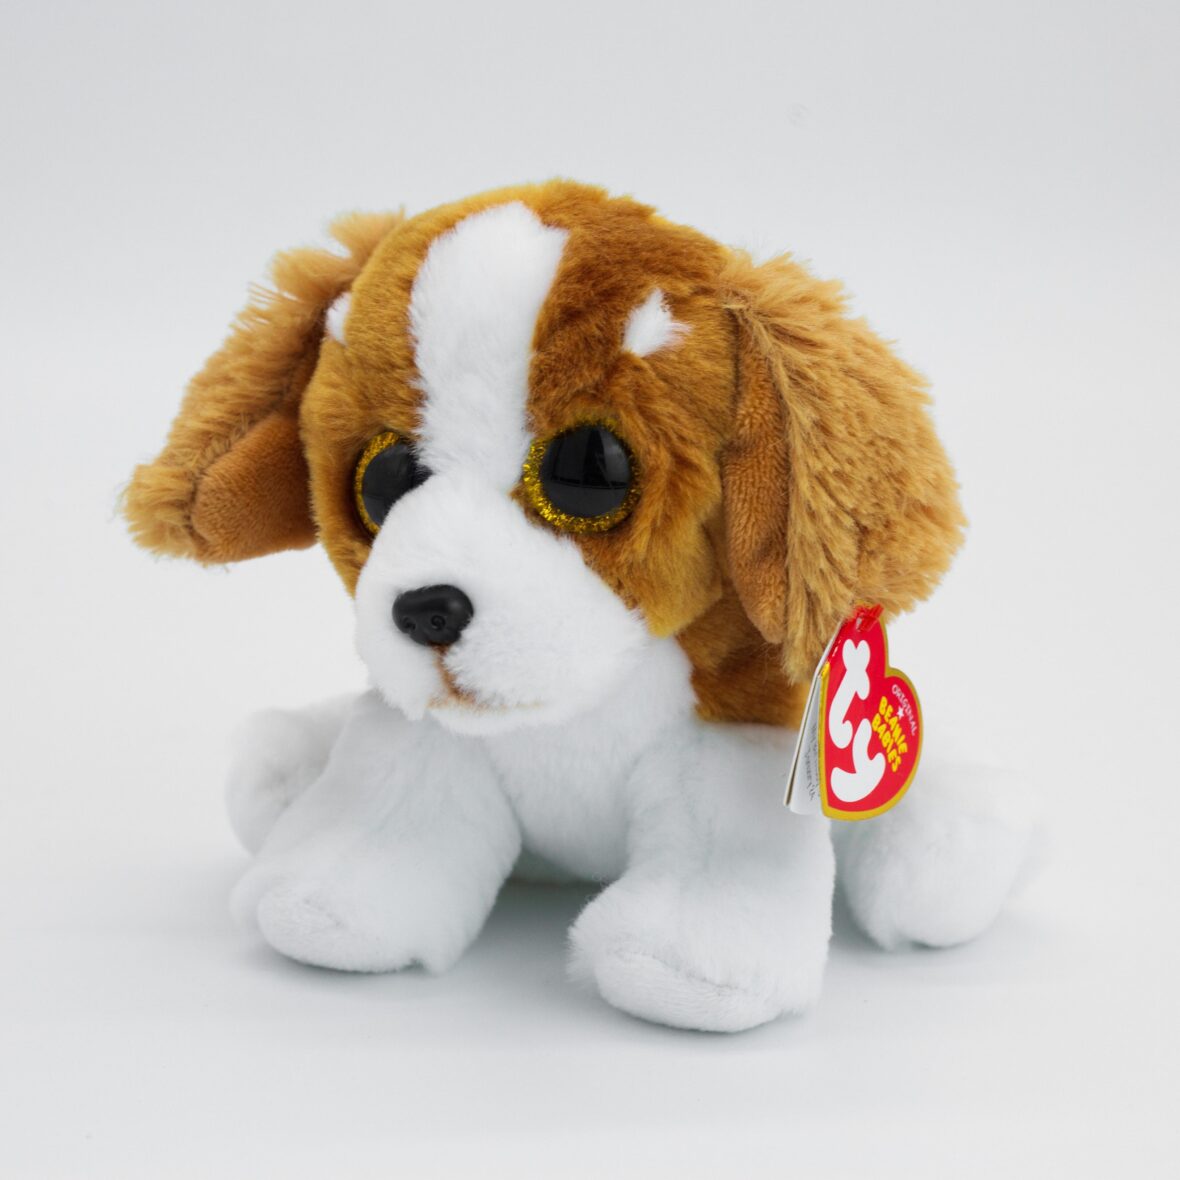 Big Eyes Dog Soft Plush Stuffed Toy